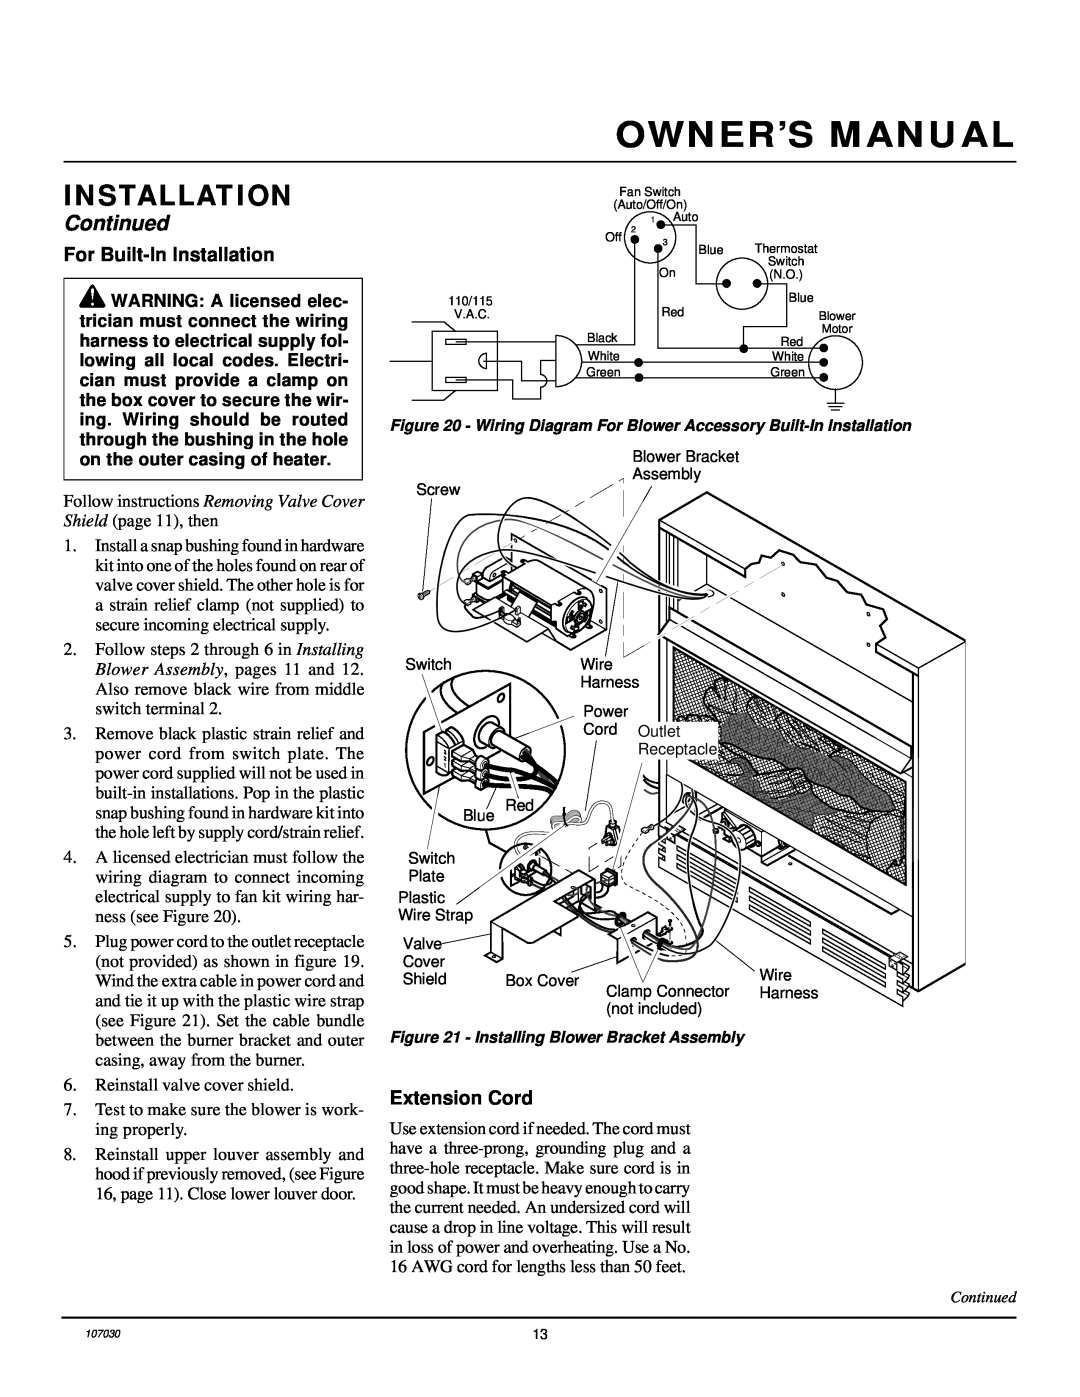 Desa VMH26TPB 14 installation manual For Built-InInstallation, Extension Cord, Continued 